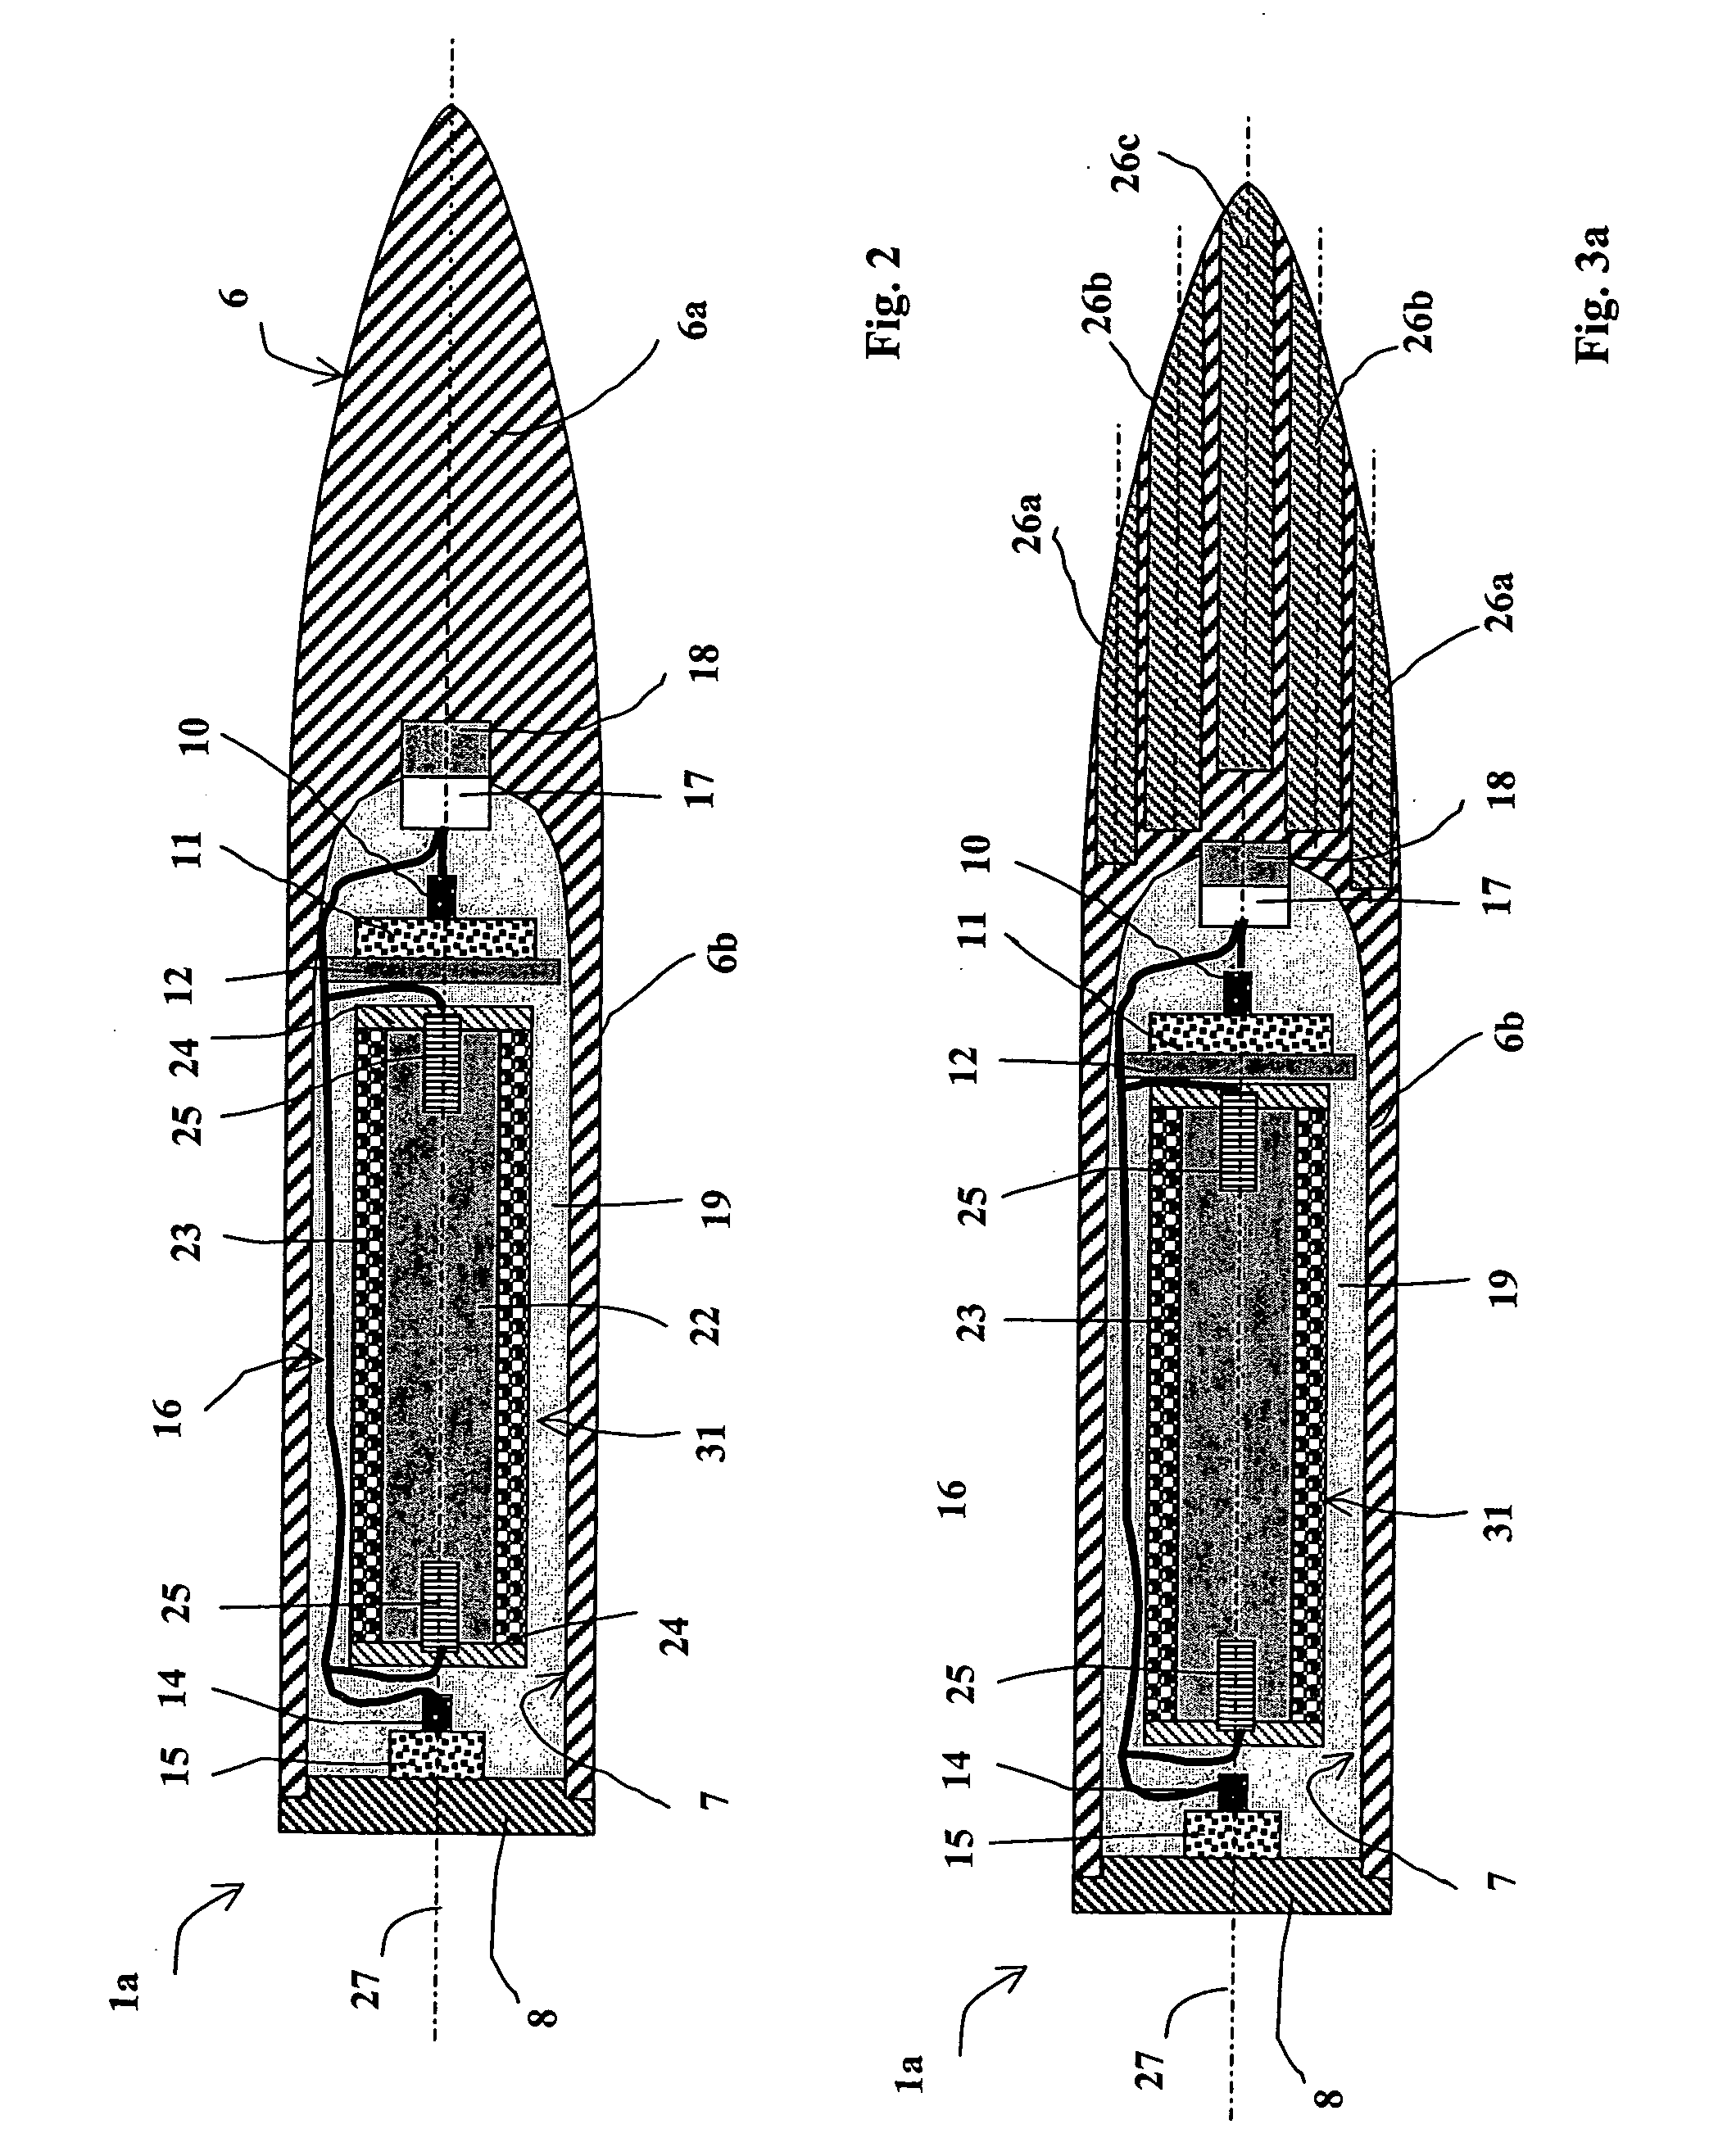 Anti-bunker ammunition